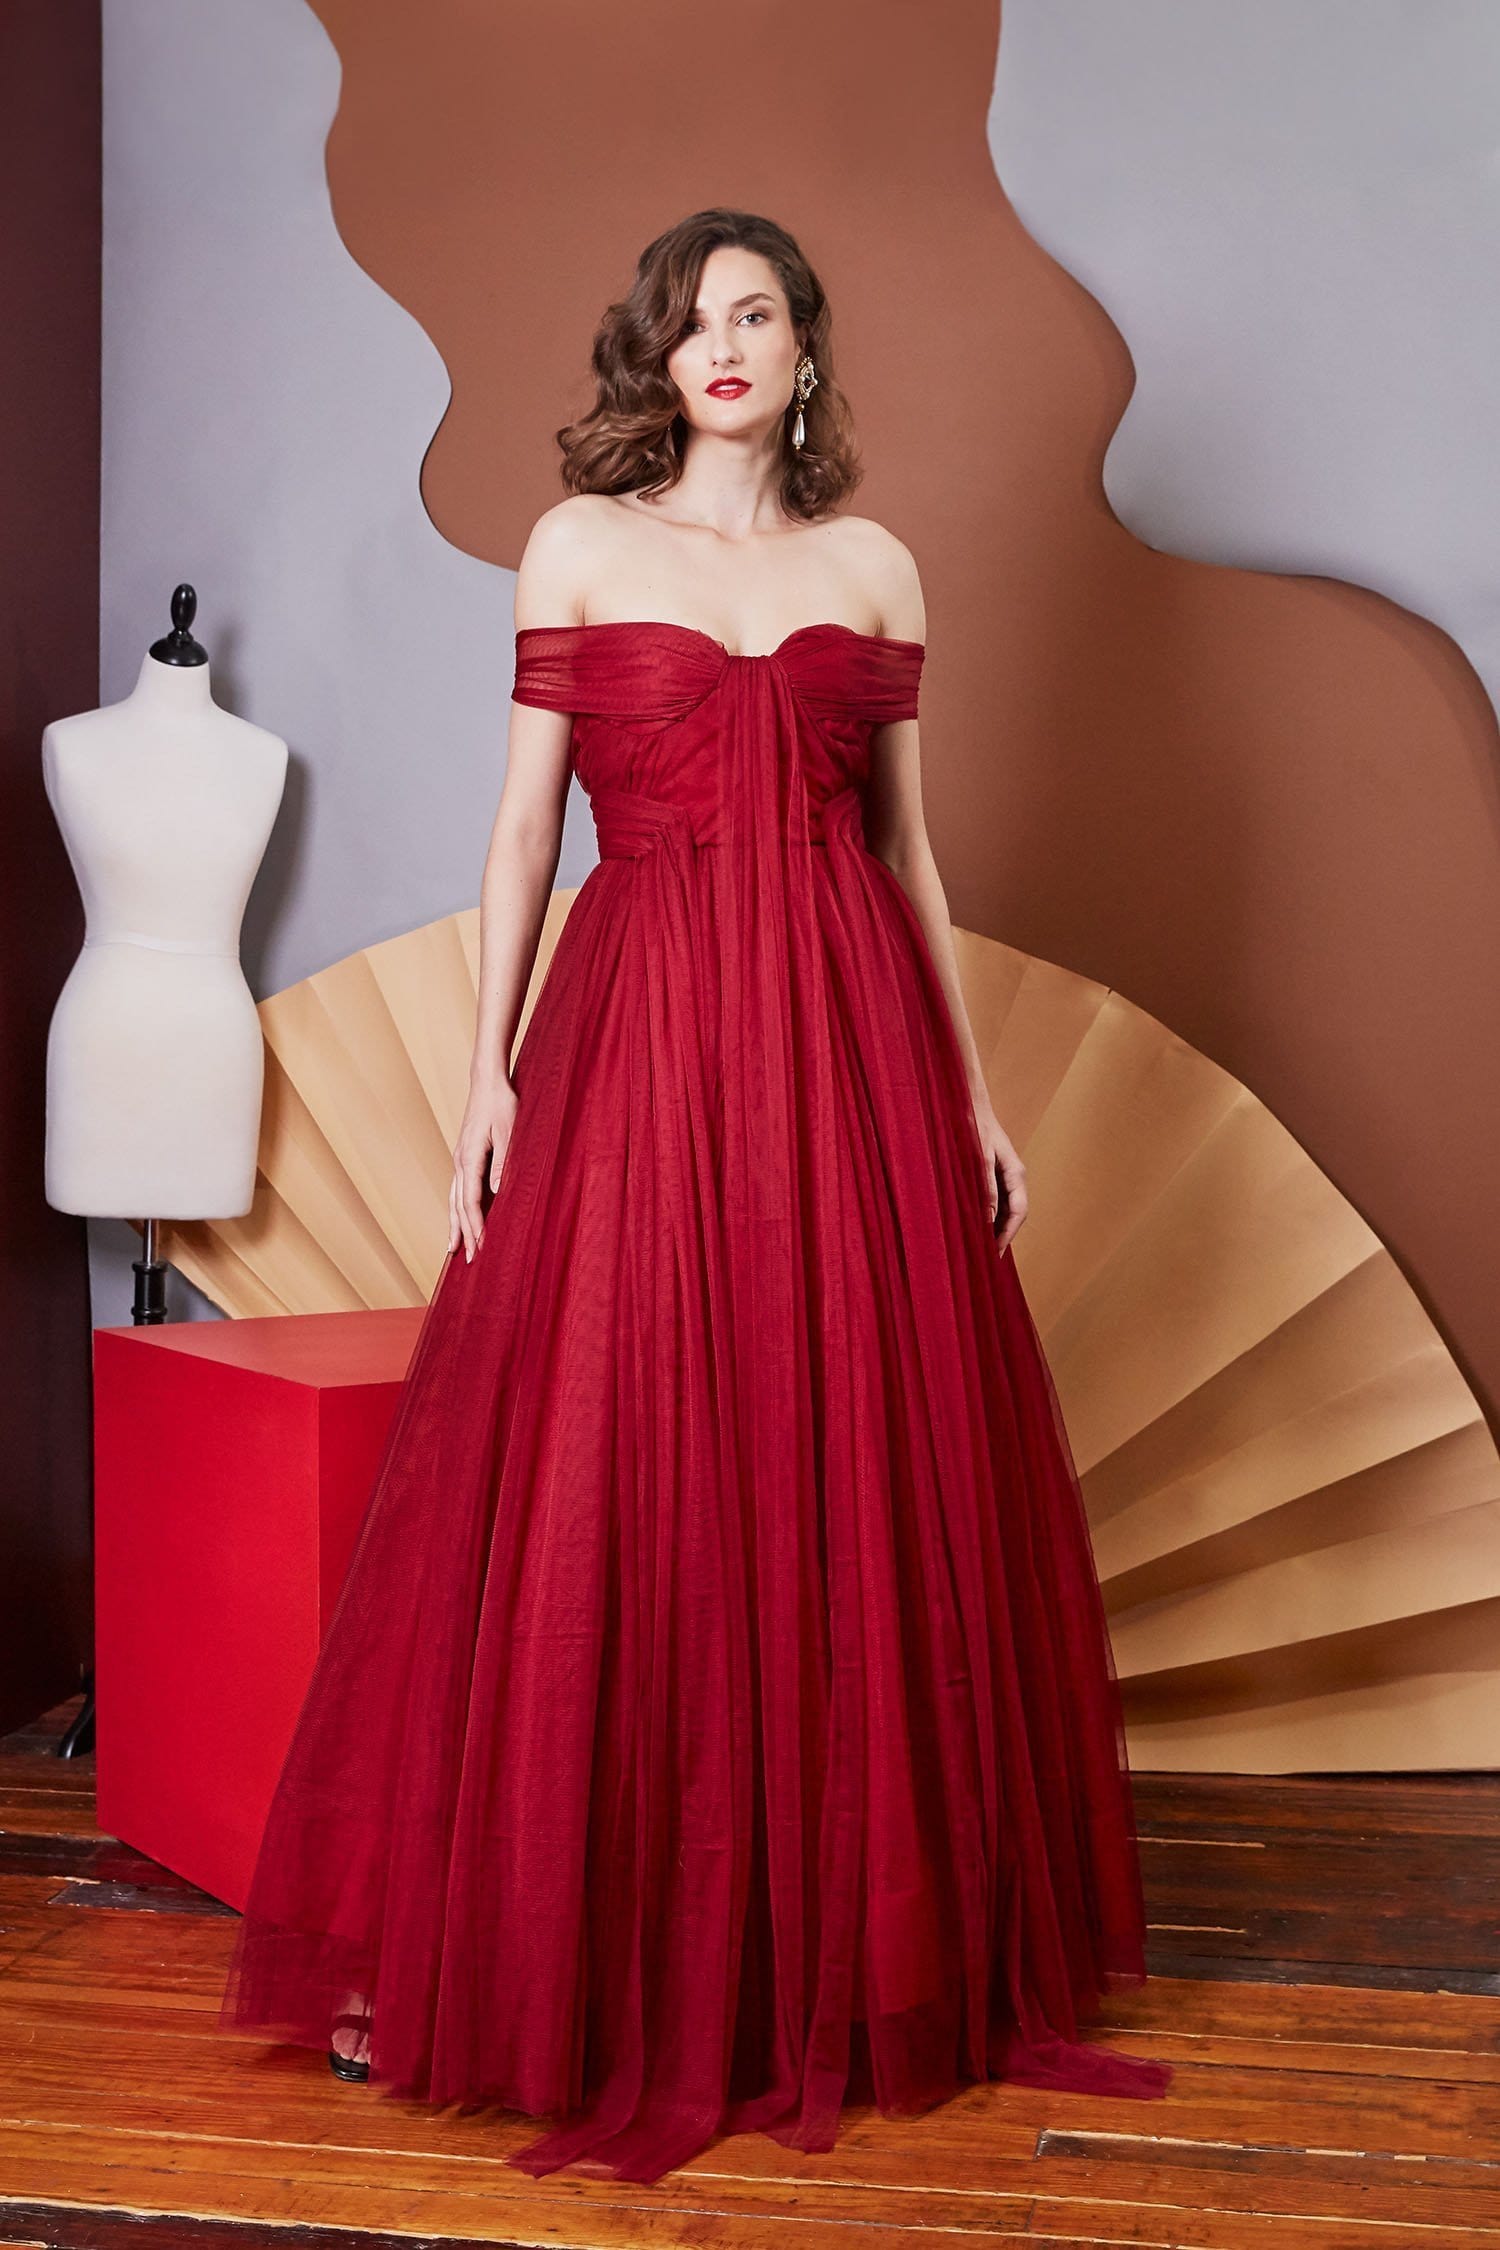 Gorgeous red dress match! #edressit #fashion_match #evening_dress  #sleeveless #accessories #forlmal_gown